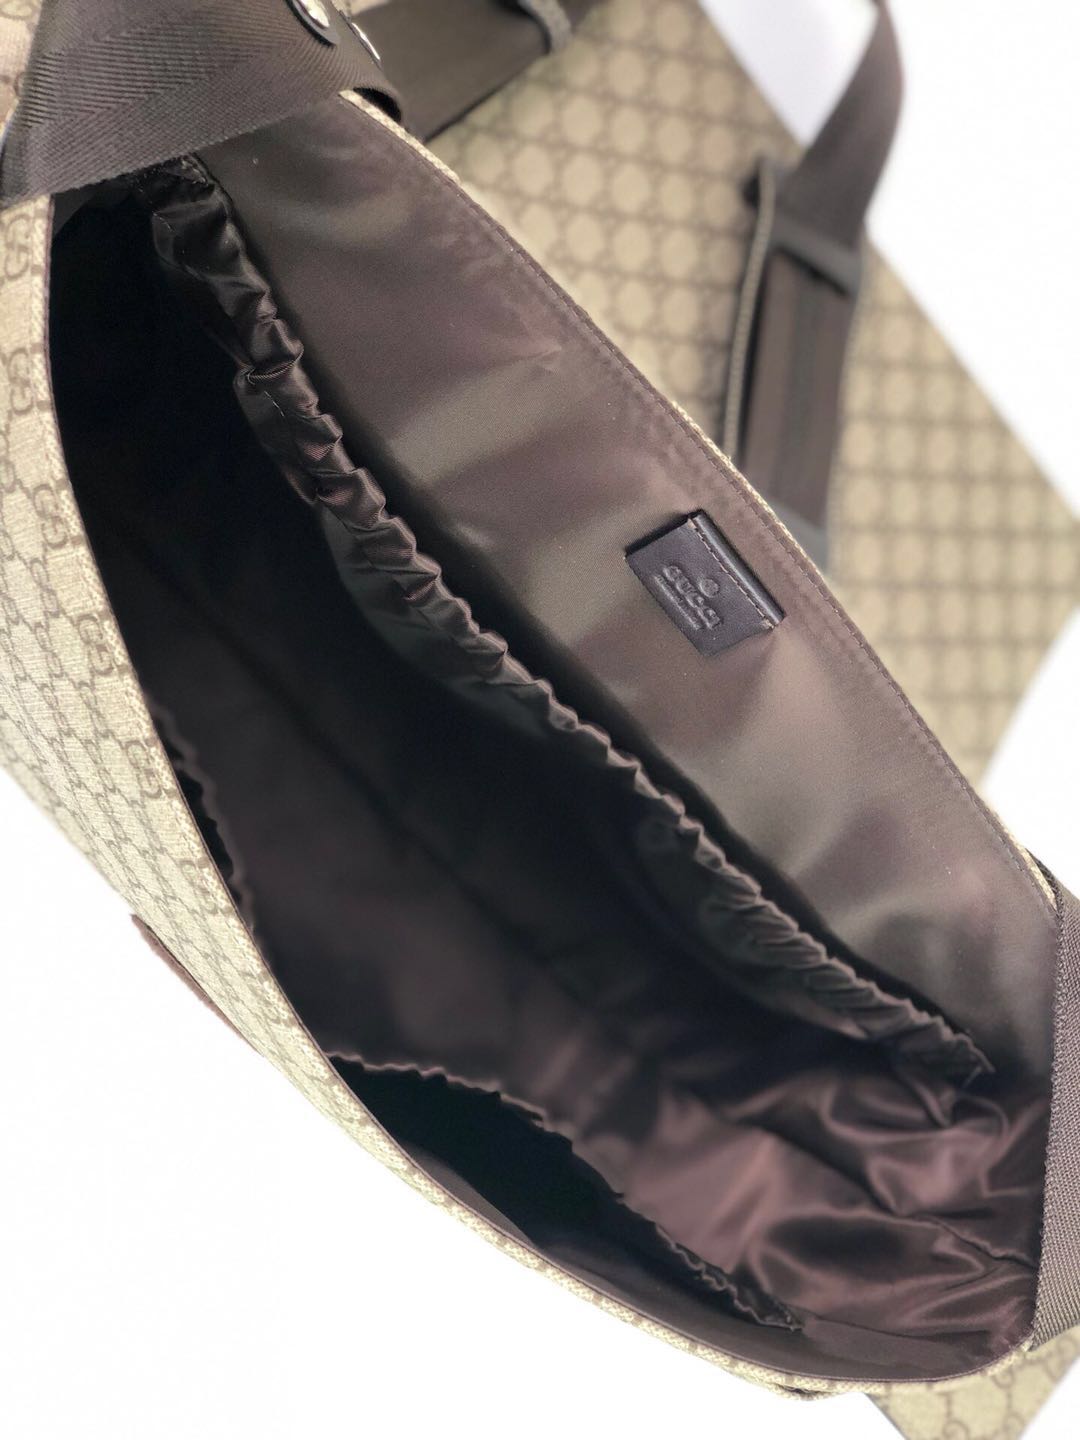   Gucci Messenger Diaper Bag GG Plus 211131 Grey